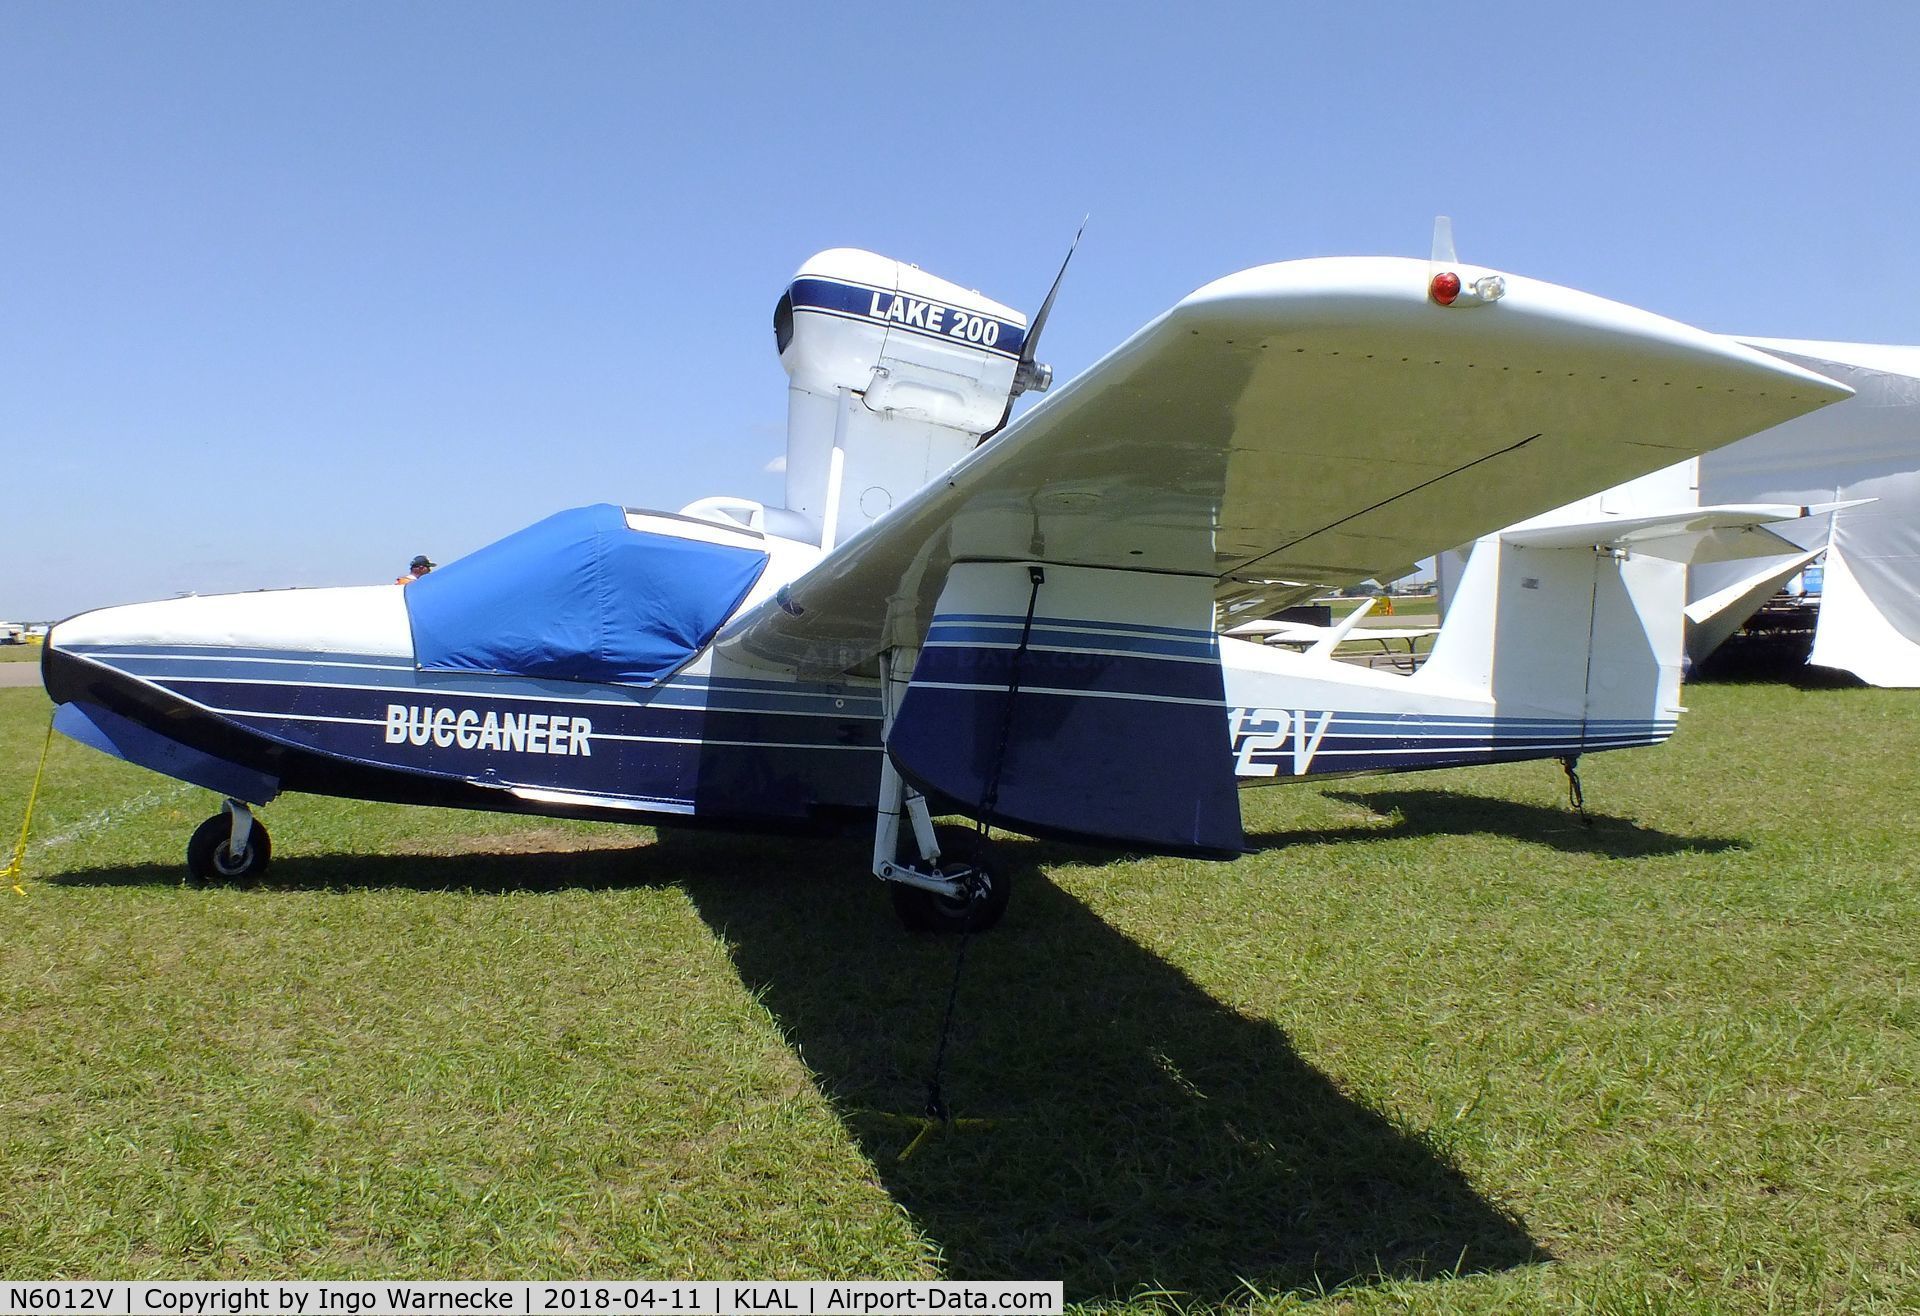 N6012V, 1976 Consolidated Aeronautics Inc. Lake LA-4-200 C/N 767, Lake LA-4-200 Buccaneer at 2018 Sun 'n Fun, Lakeland FL